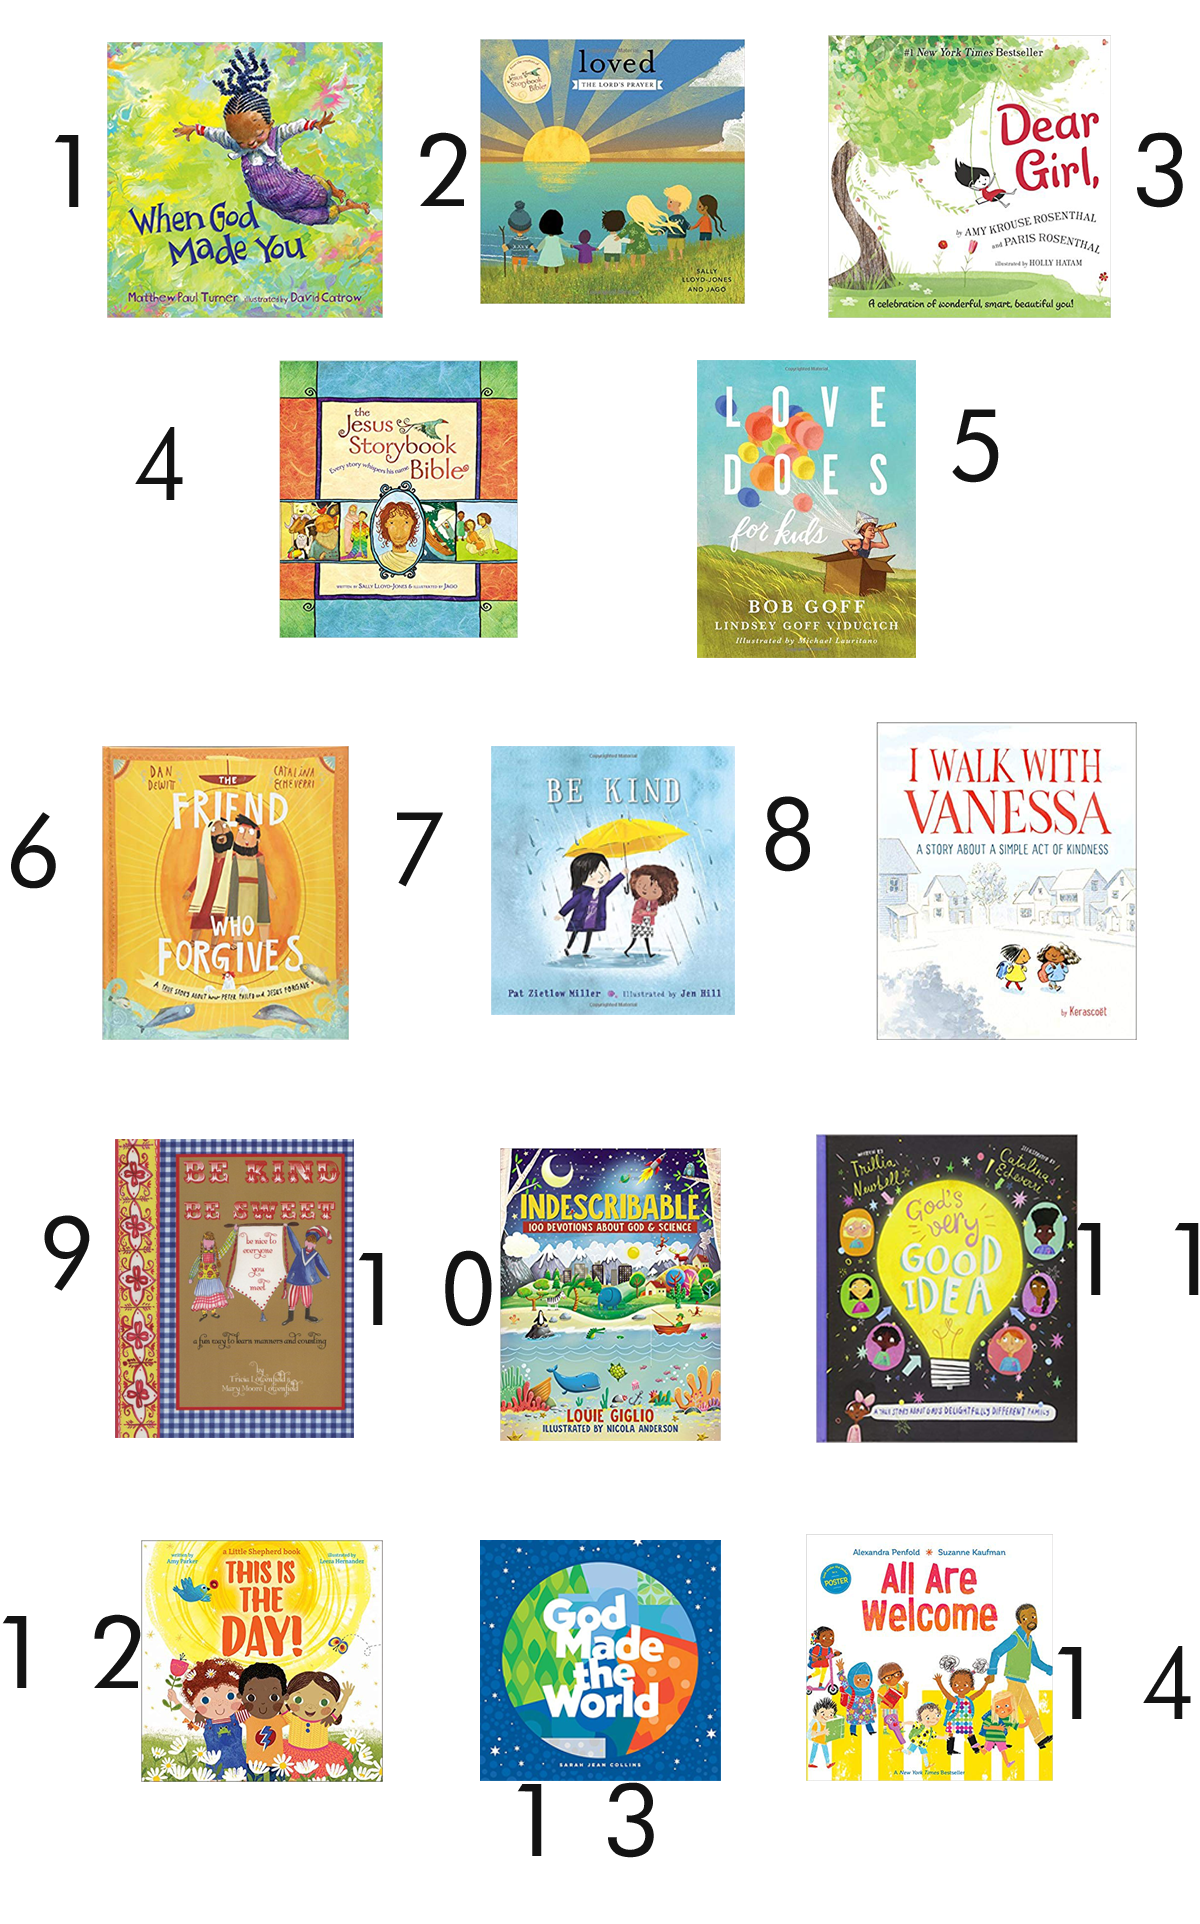 empathy / kindness / christian books for children to gift